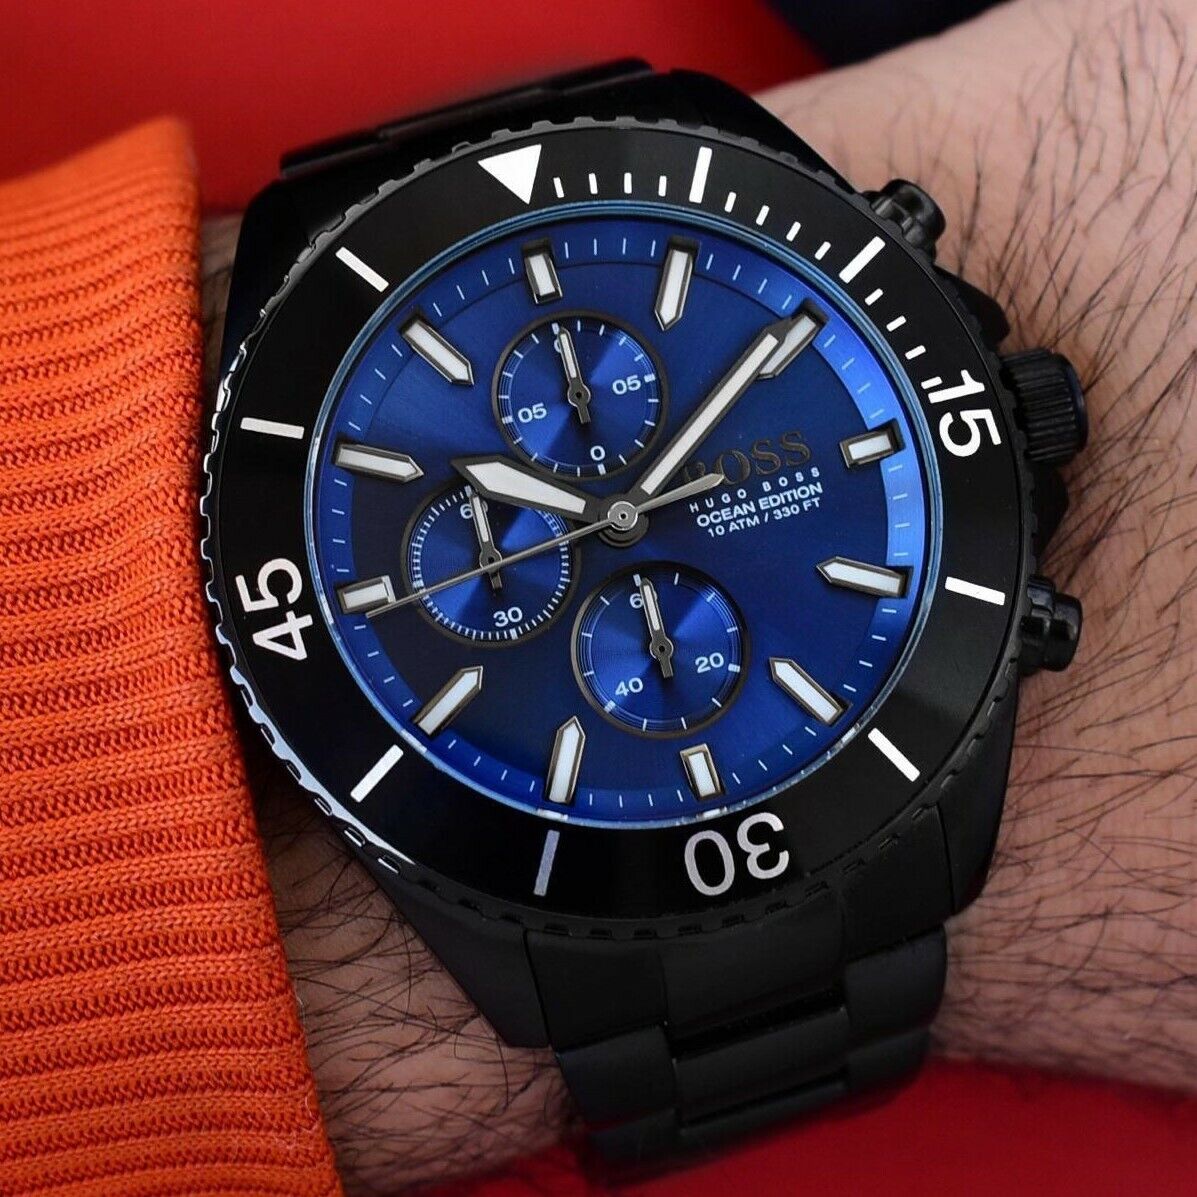 Hugo Boss Ocean Edition Blue Dial Black Steel Strap Watch for Men - 1513743